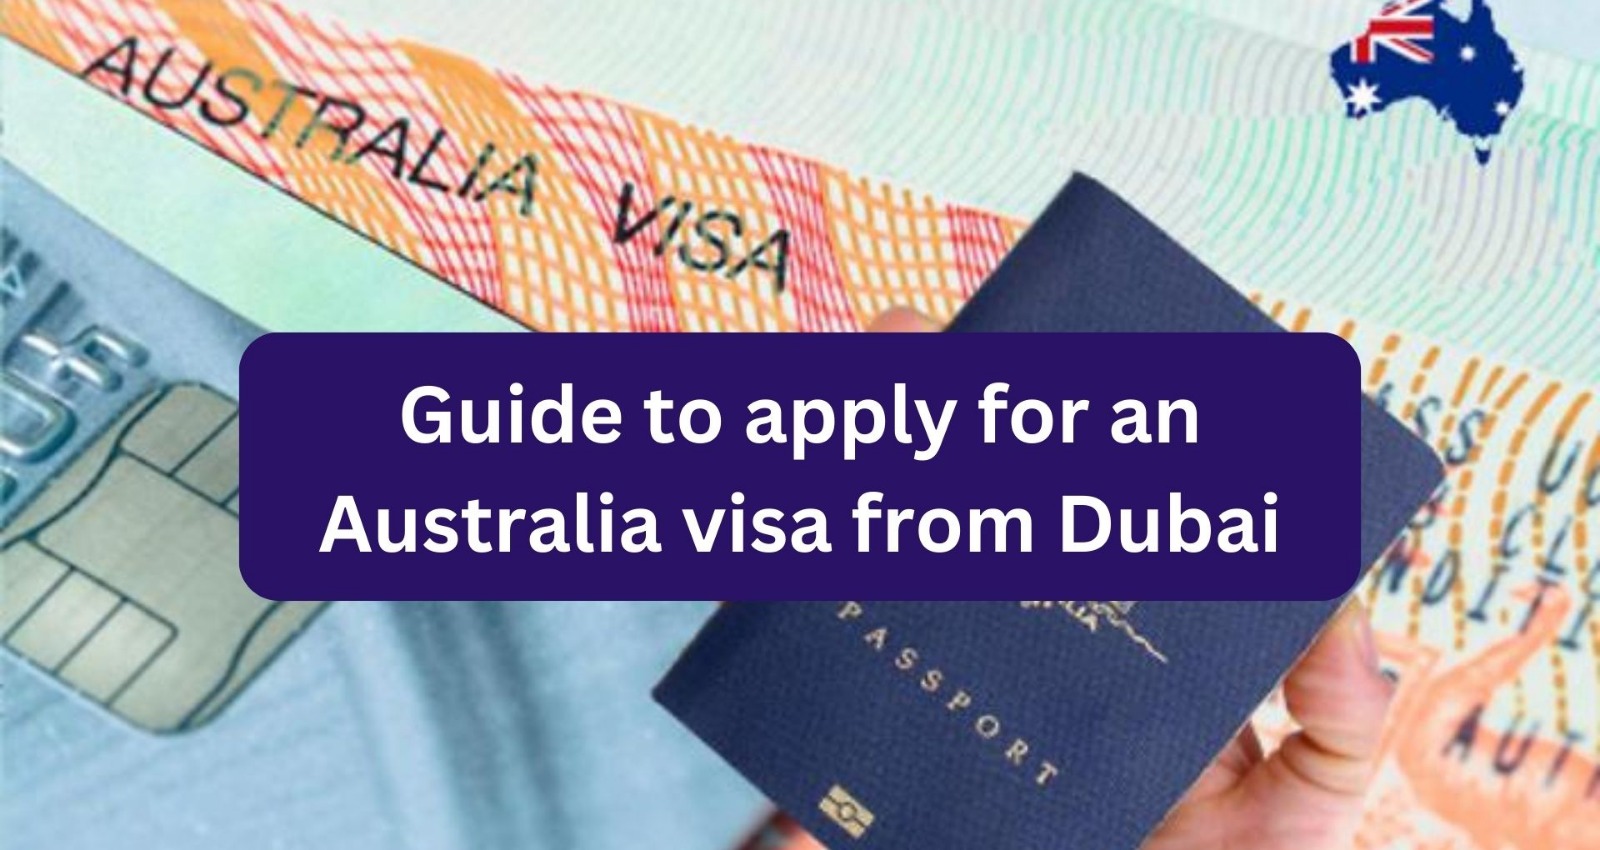 Guide to apply for a Australia visa from Dubai